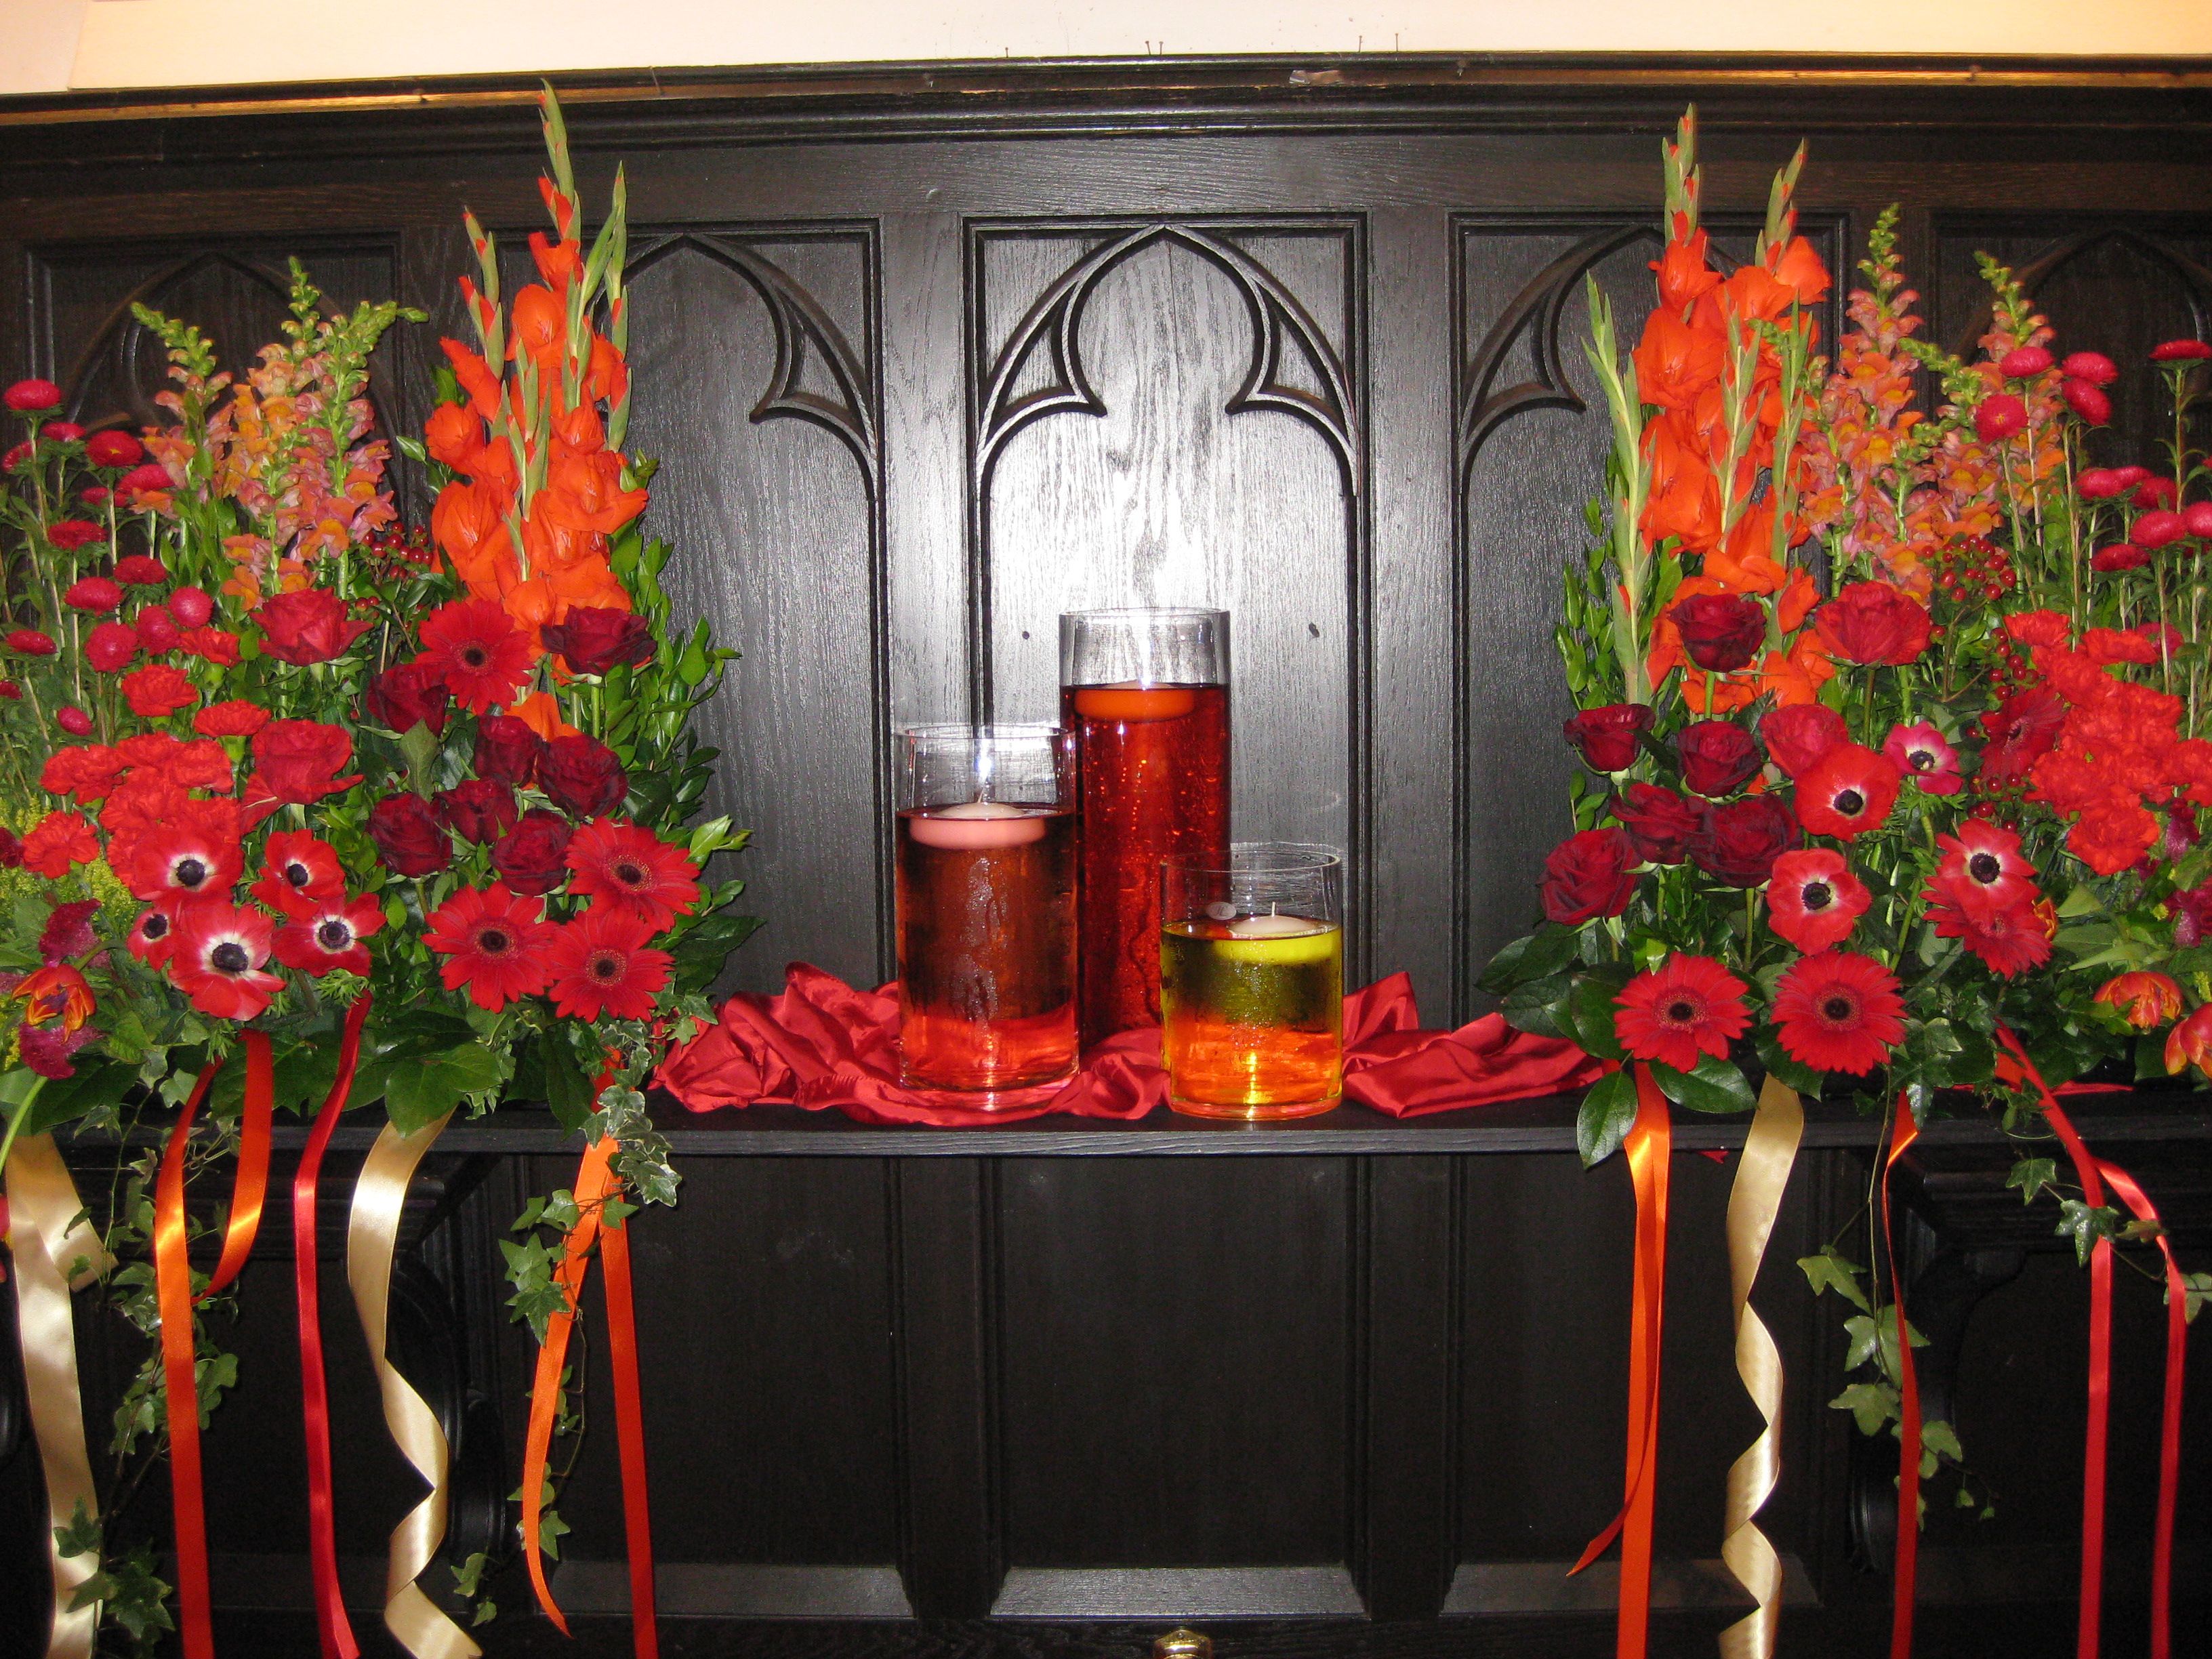 Pentecost | Episcopal Church | Pinterest | Churches, Altars and Flowers